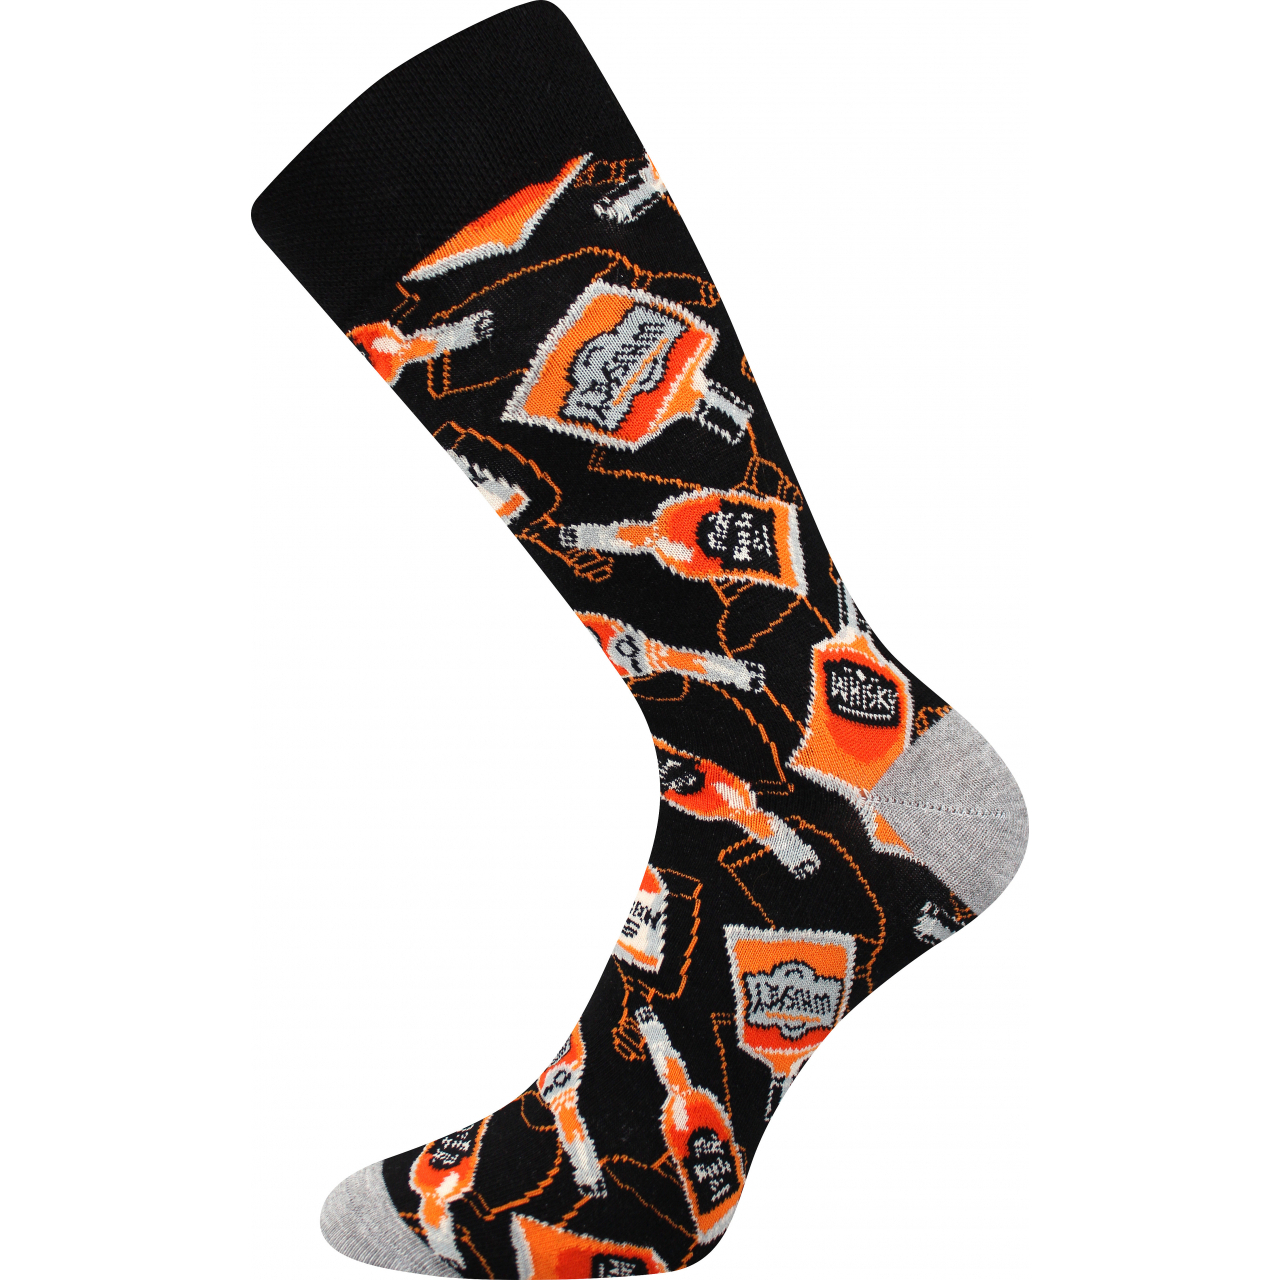 Ponožky trendy pánské Lonka Depate Kaktusy - černé-oranžové, 39-42